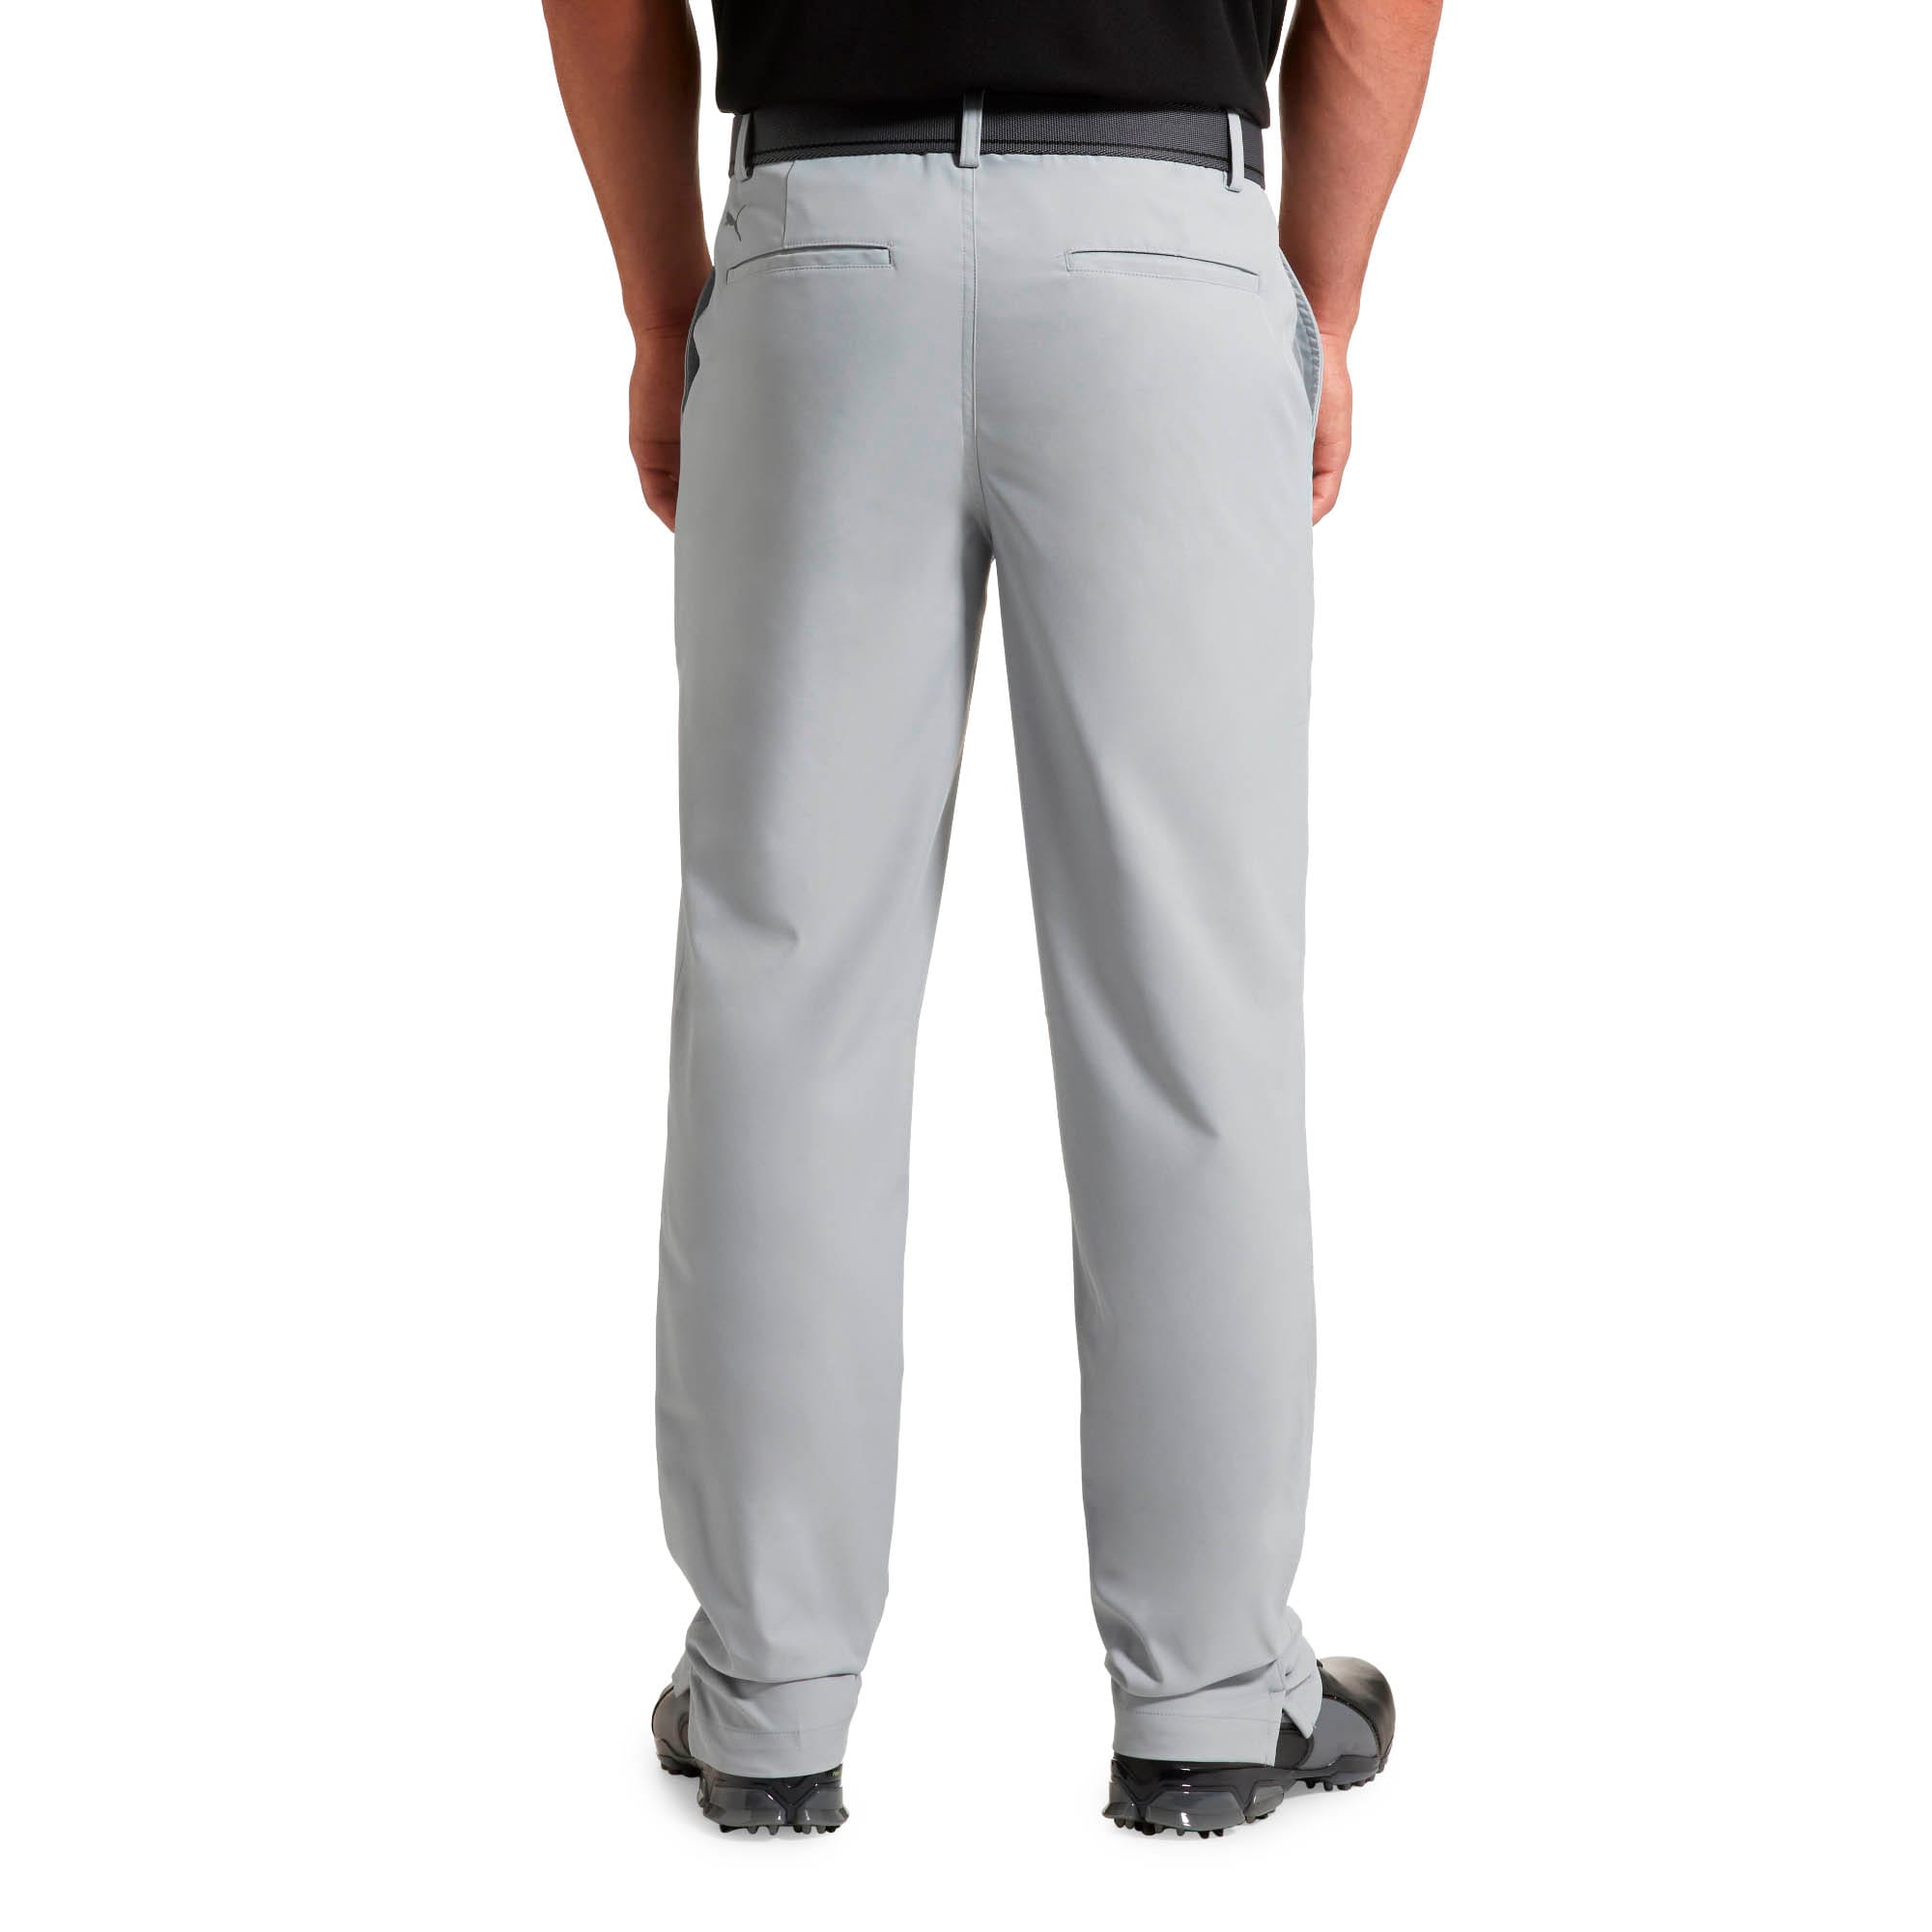 puma stretch pounce golf pants